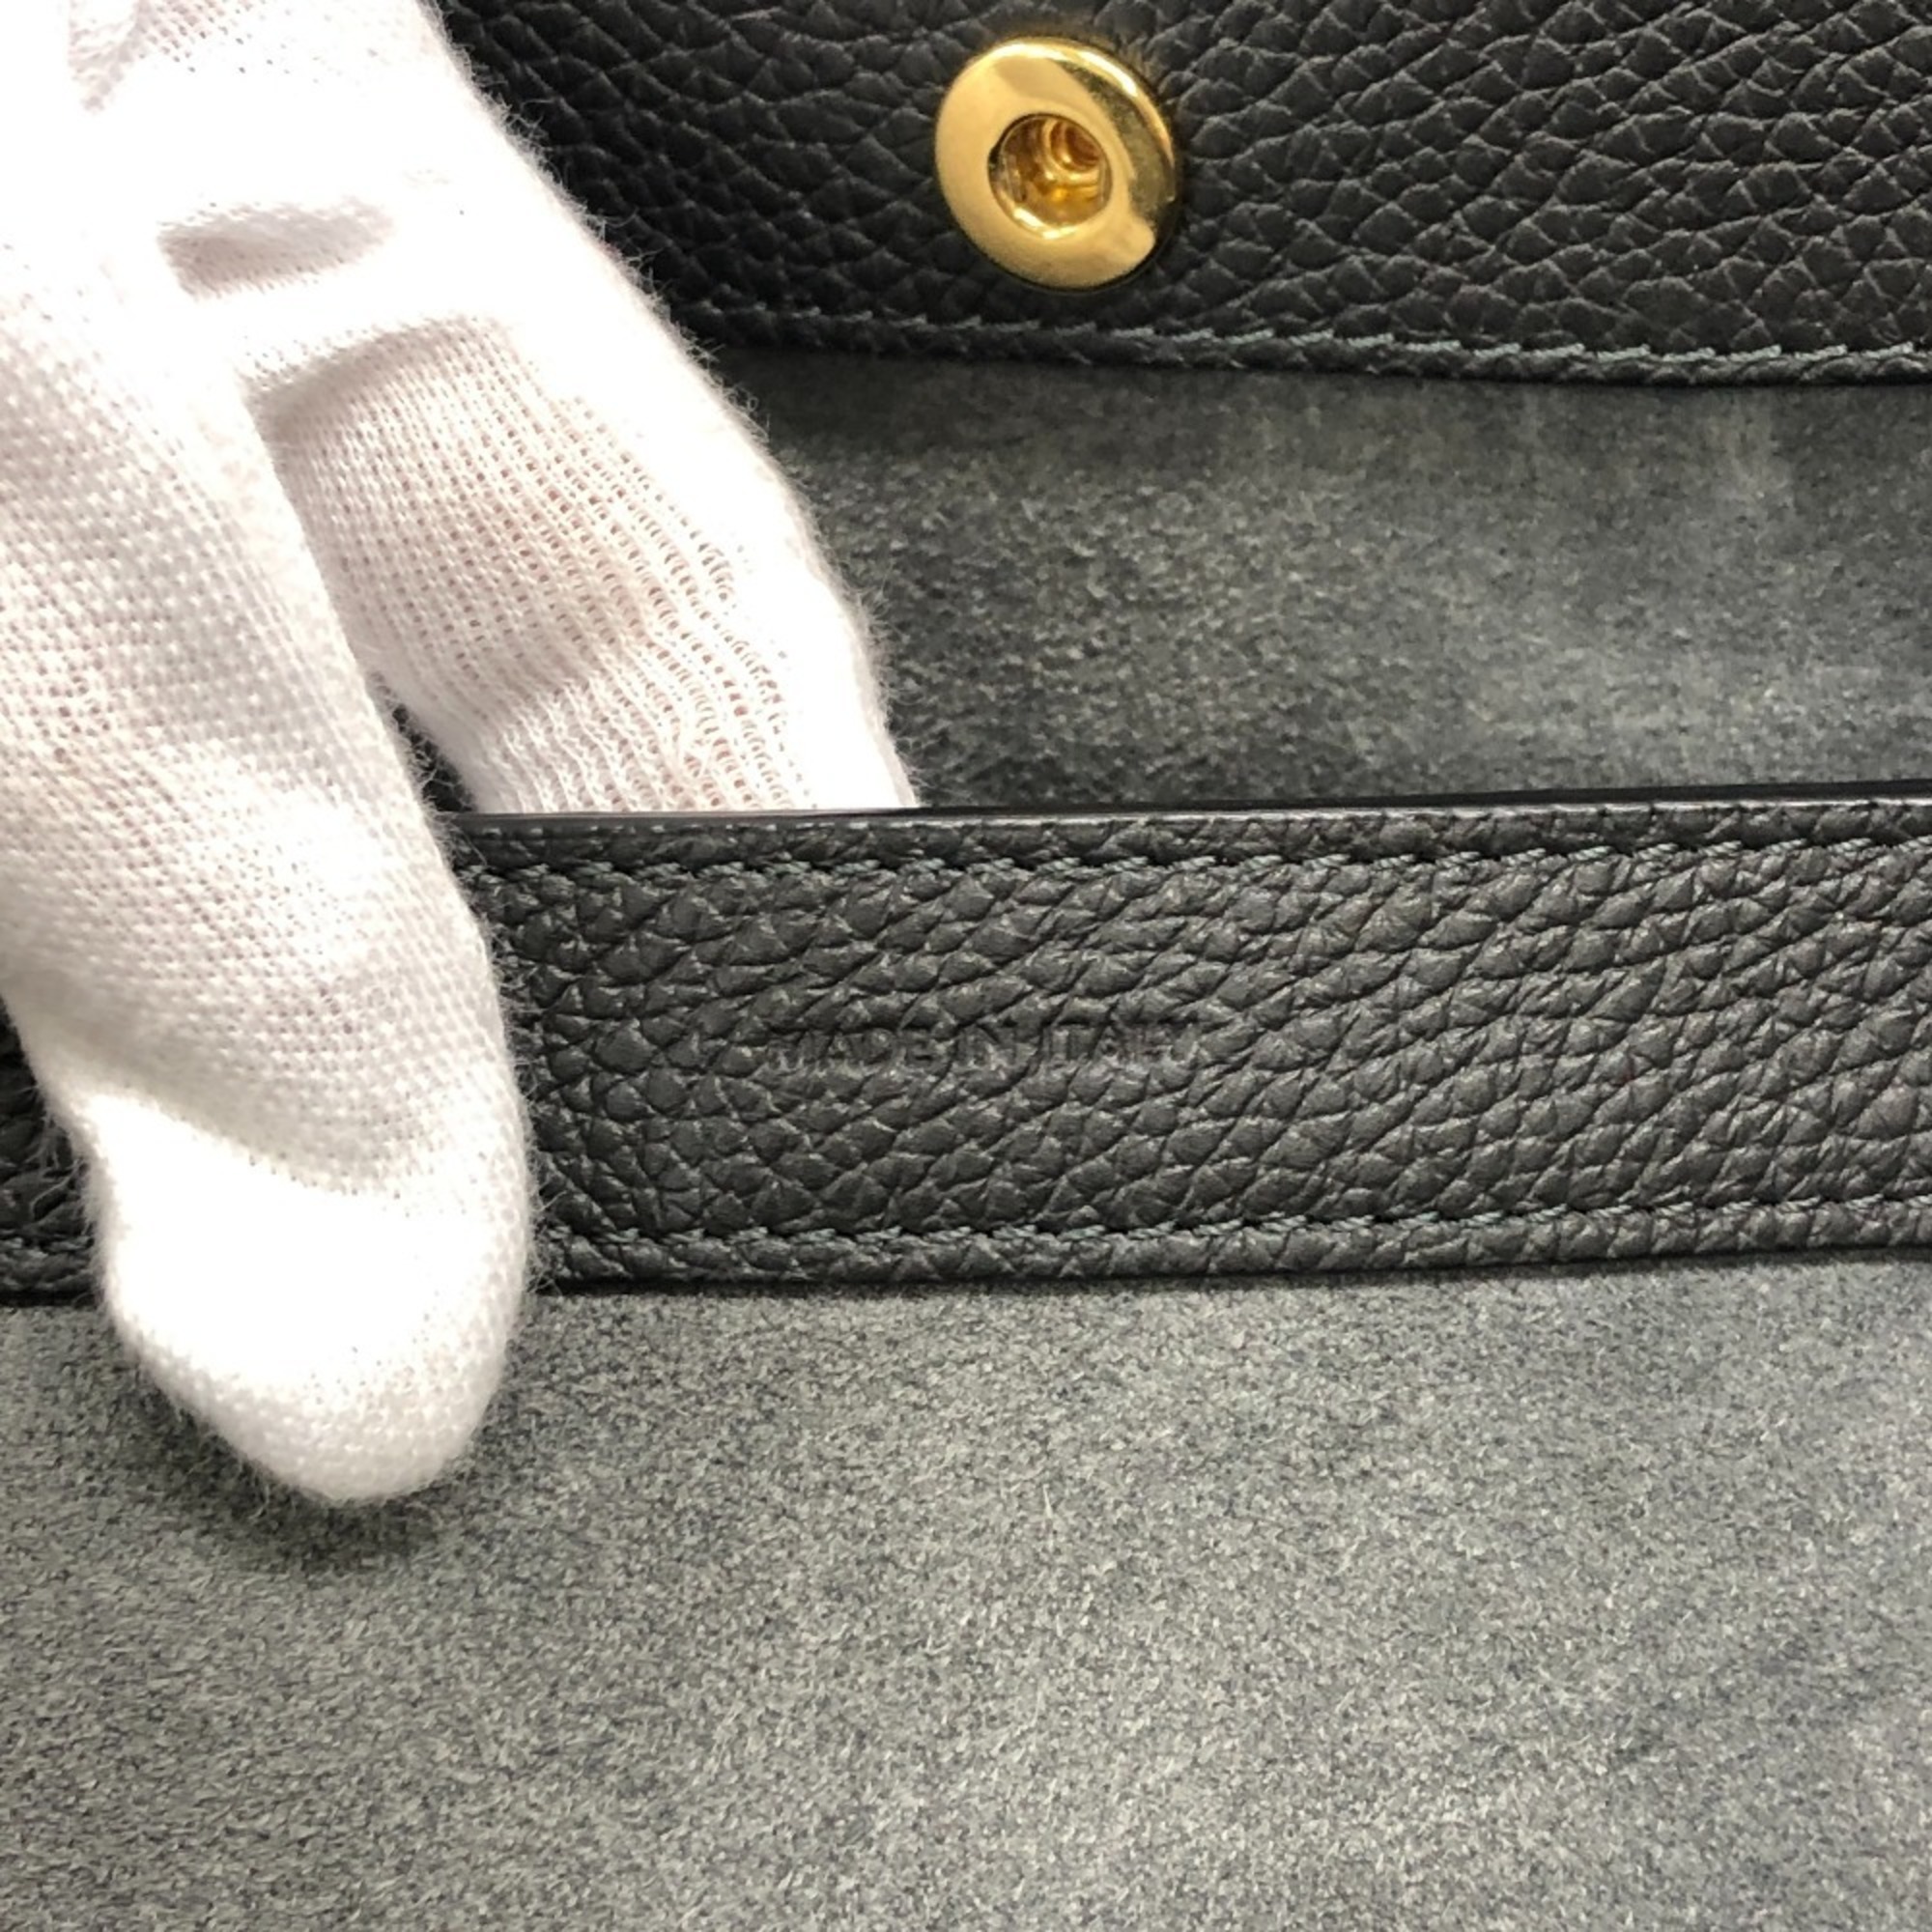 CELINE Small Fold Cabas Handbag Grey Women's Z0005821